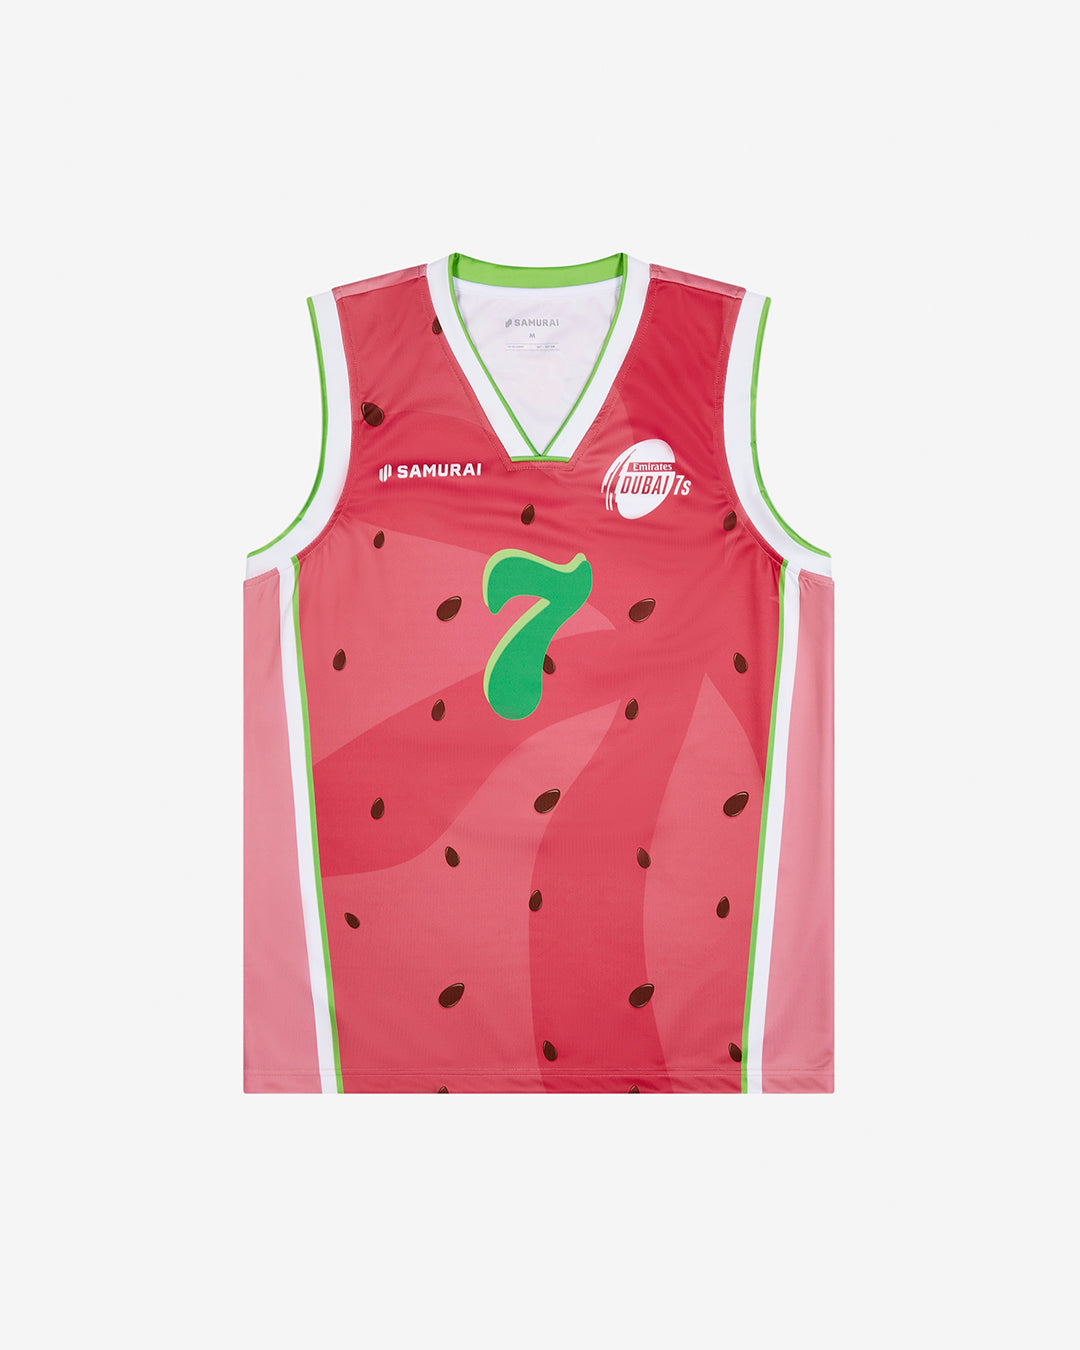 ED7:90 - Melon Sherbet Basketball Singlet - Pink